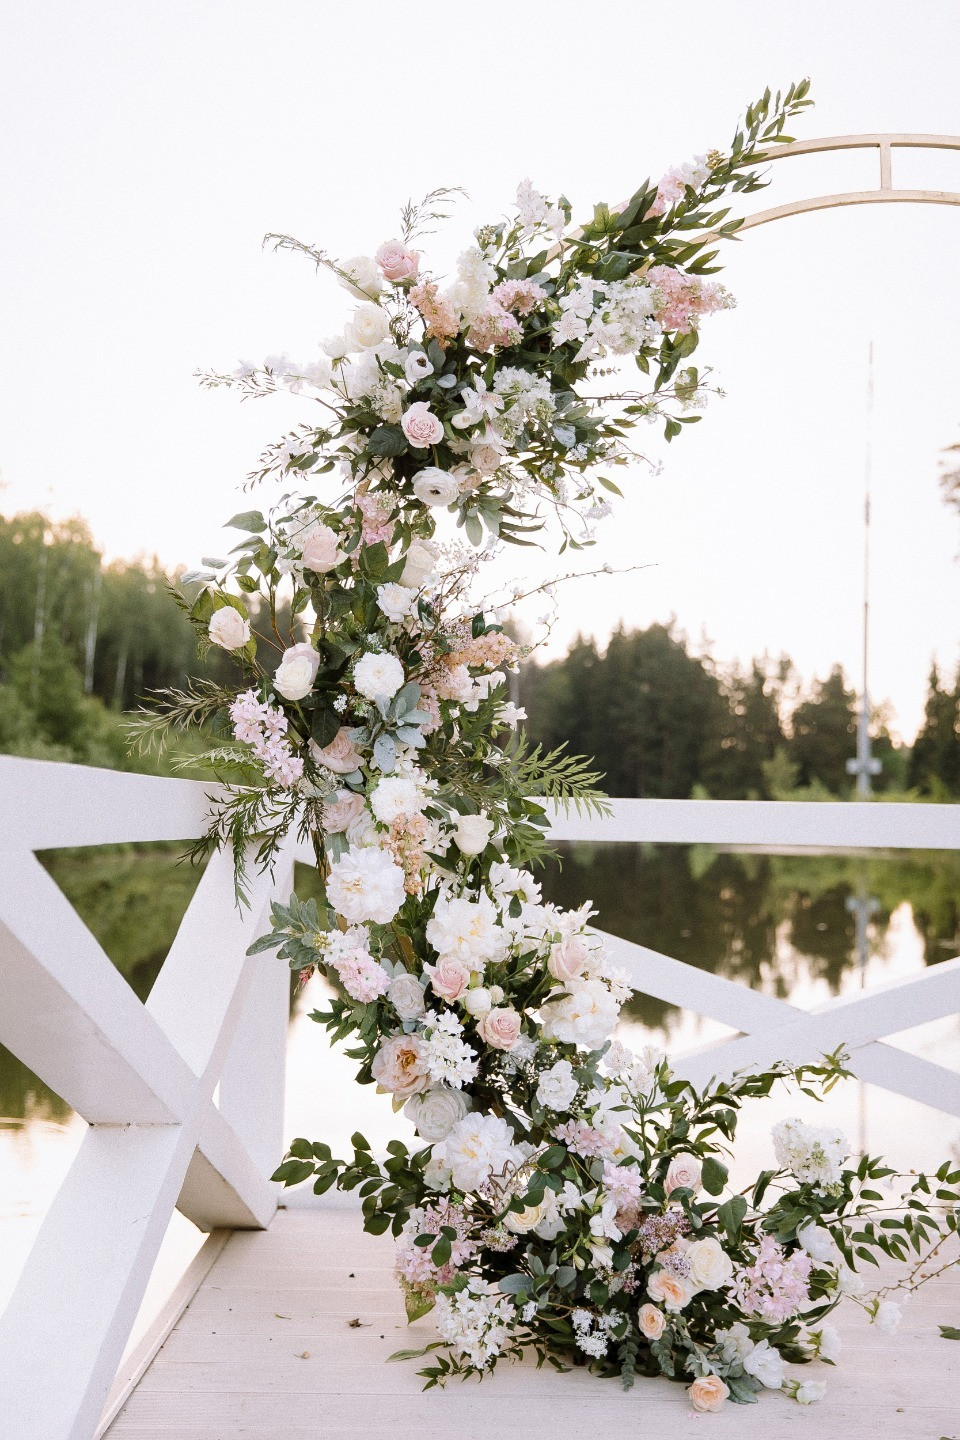 White grace: стильная свадьба в доме у озера